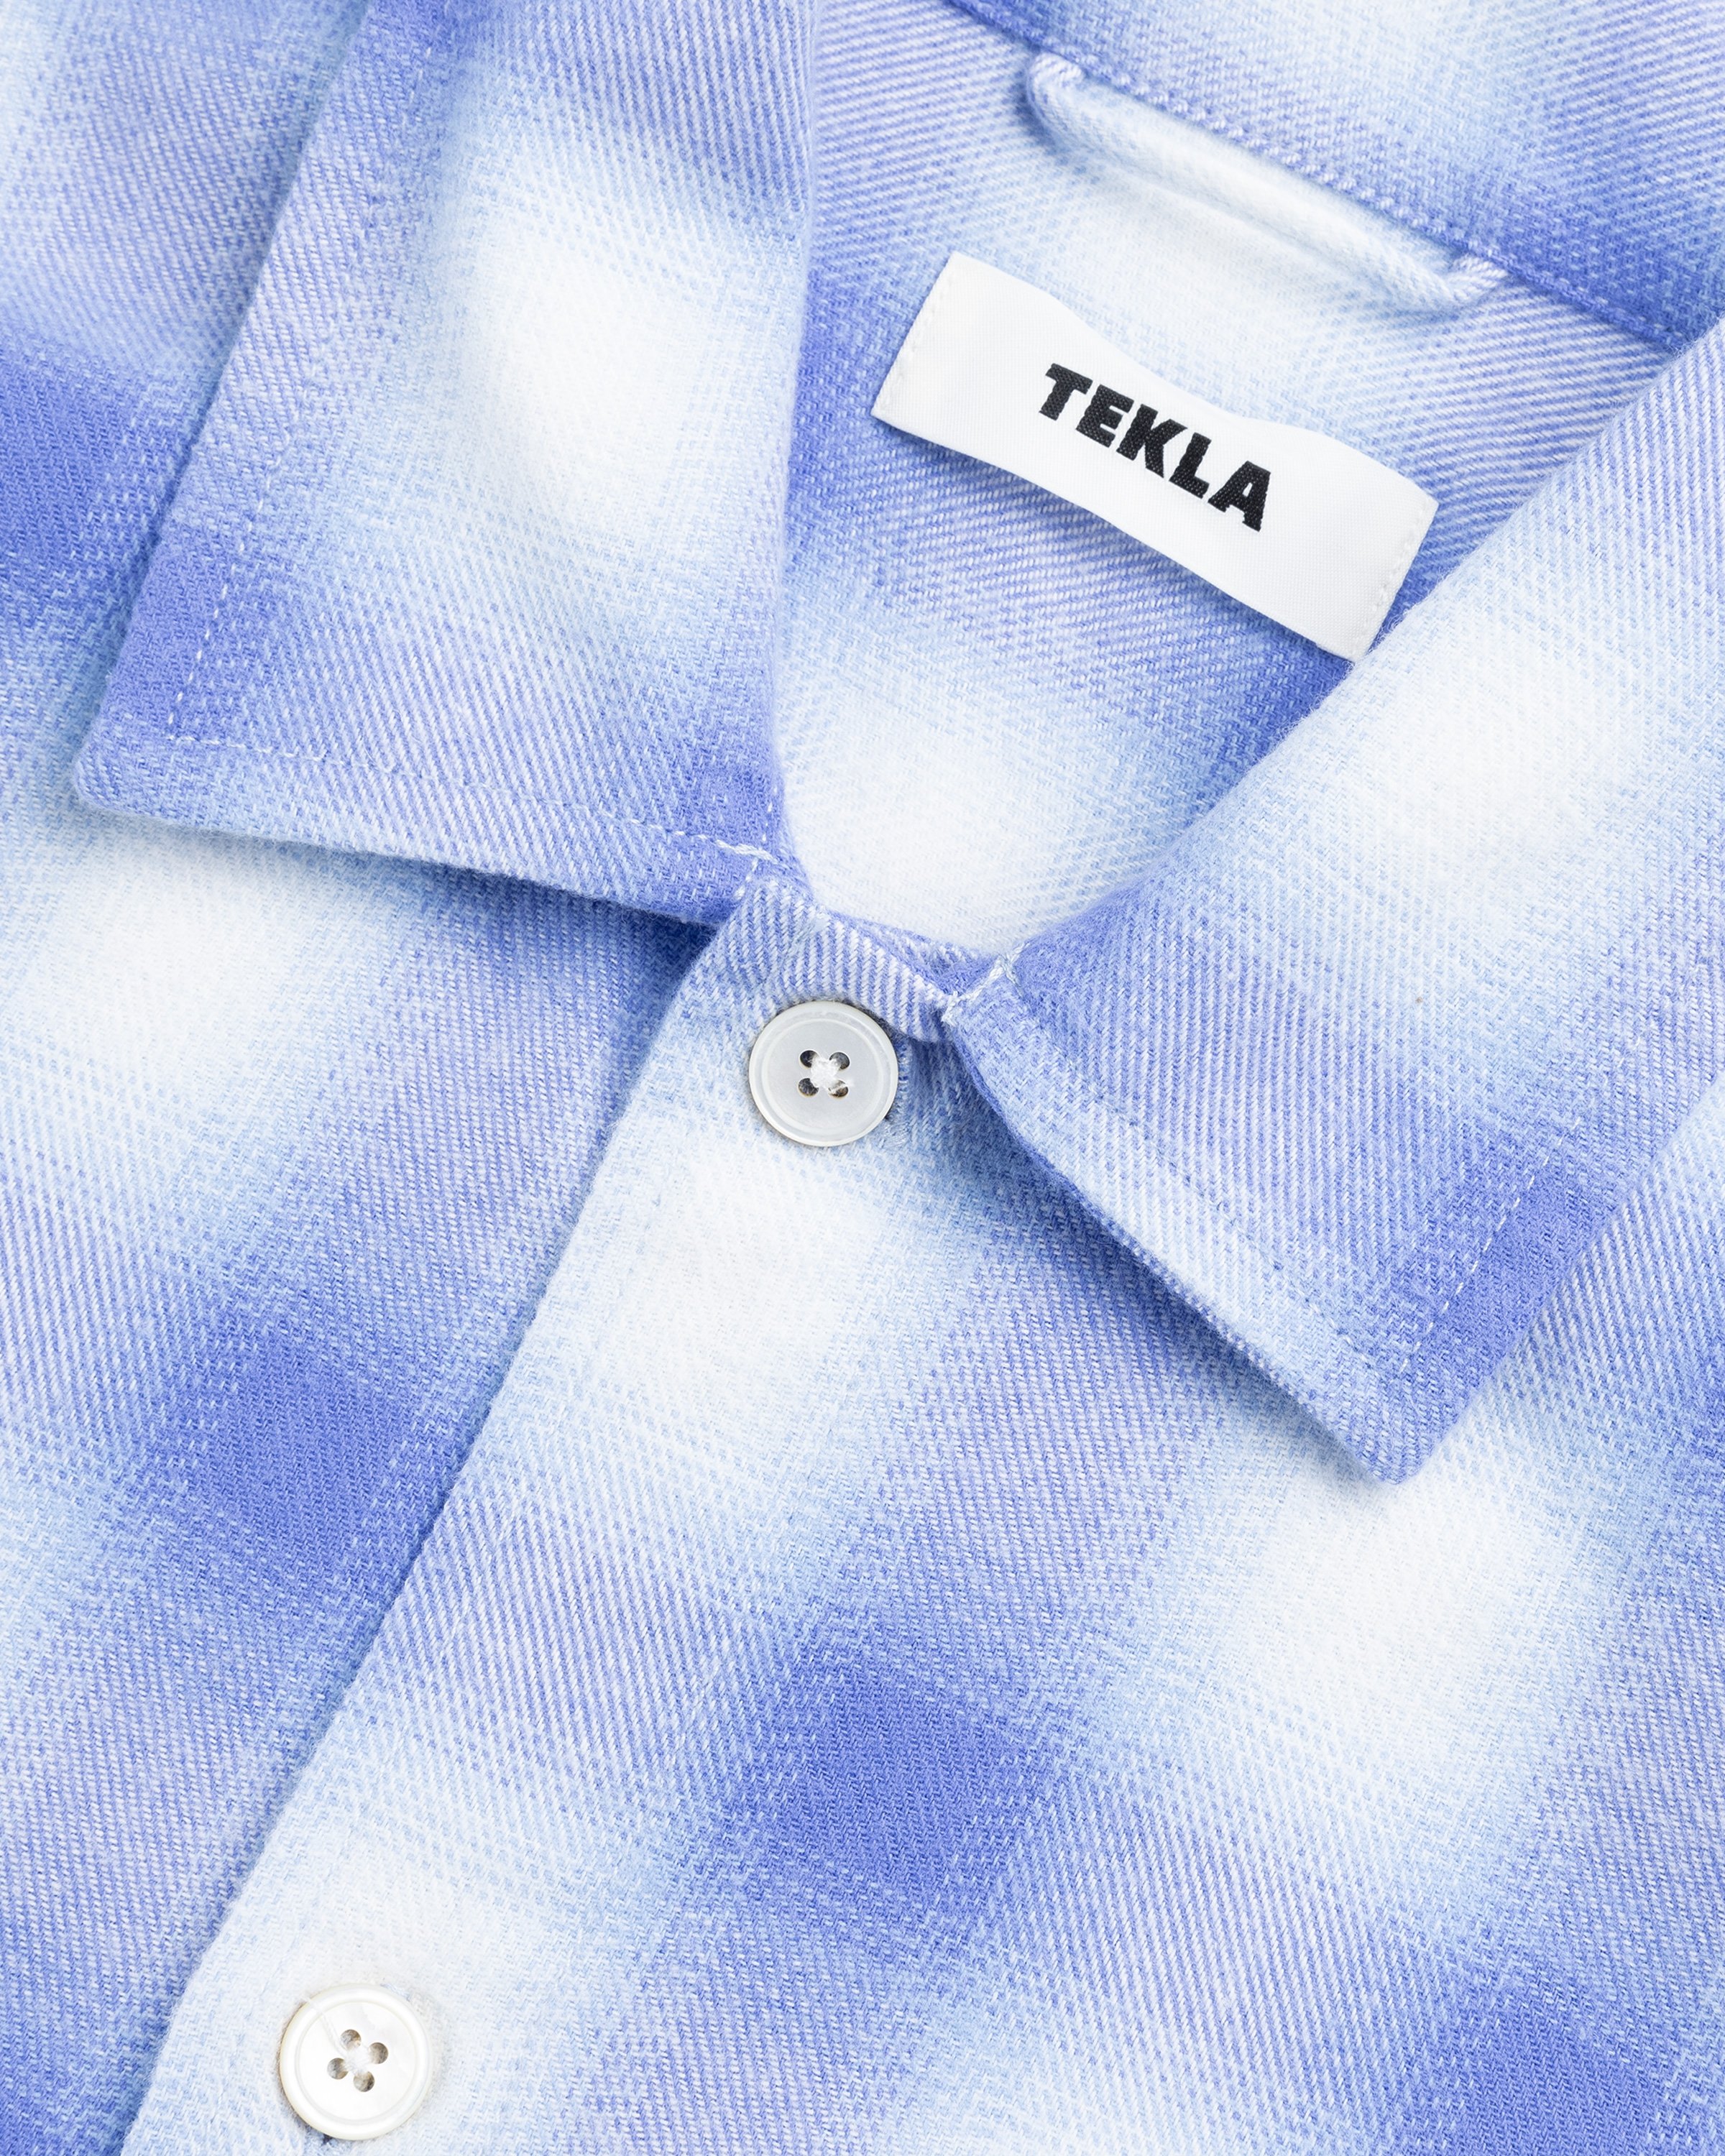 Tekla - Flannel Pyjamas Shirt Light Blue Plaid - Clothing - Blue - Image 5